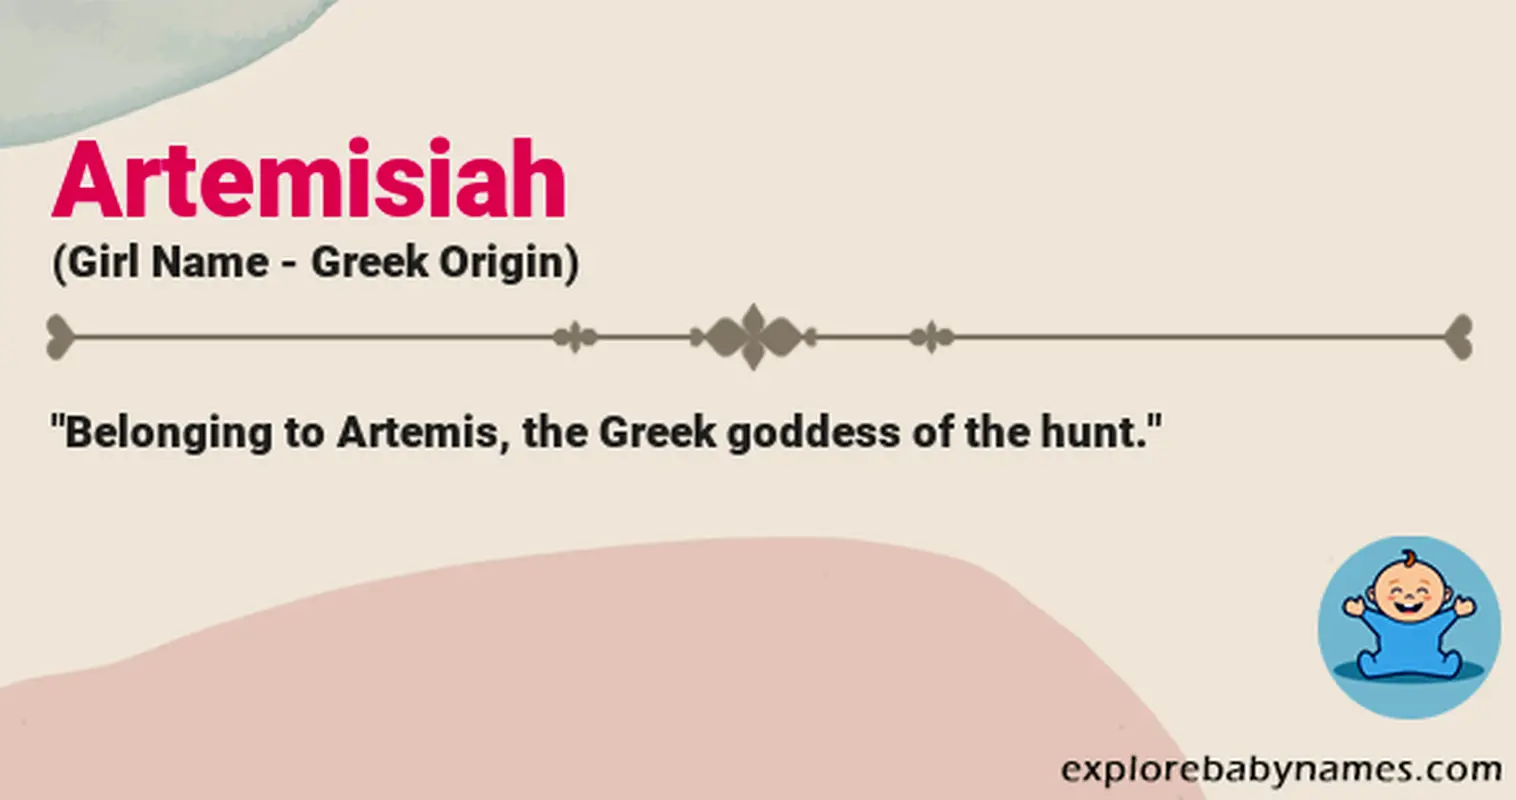 Meaning of Artemisiah